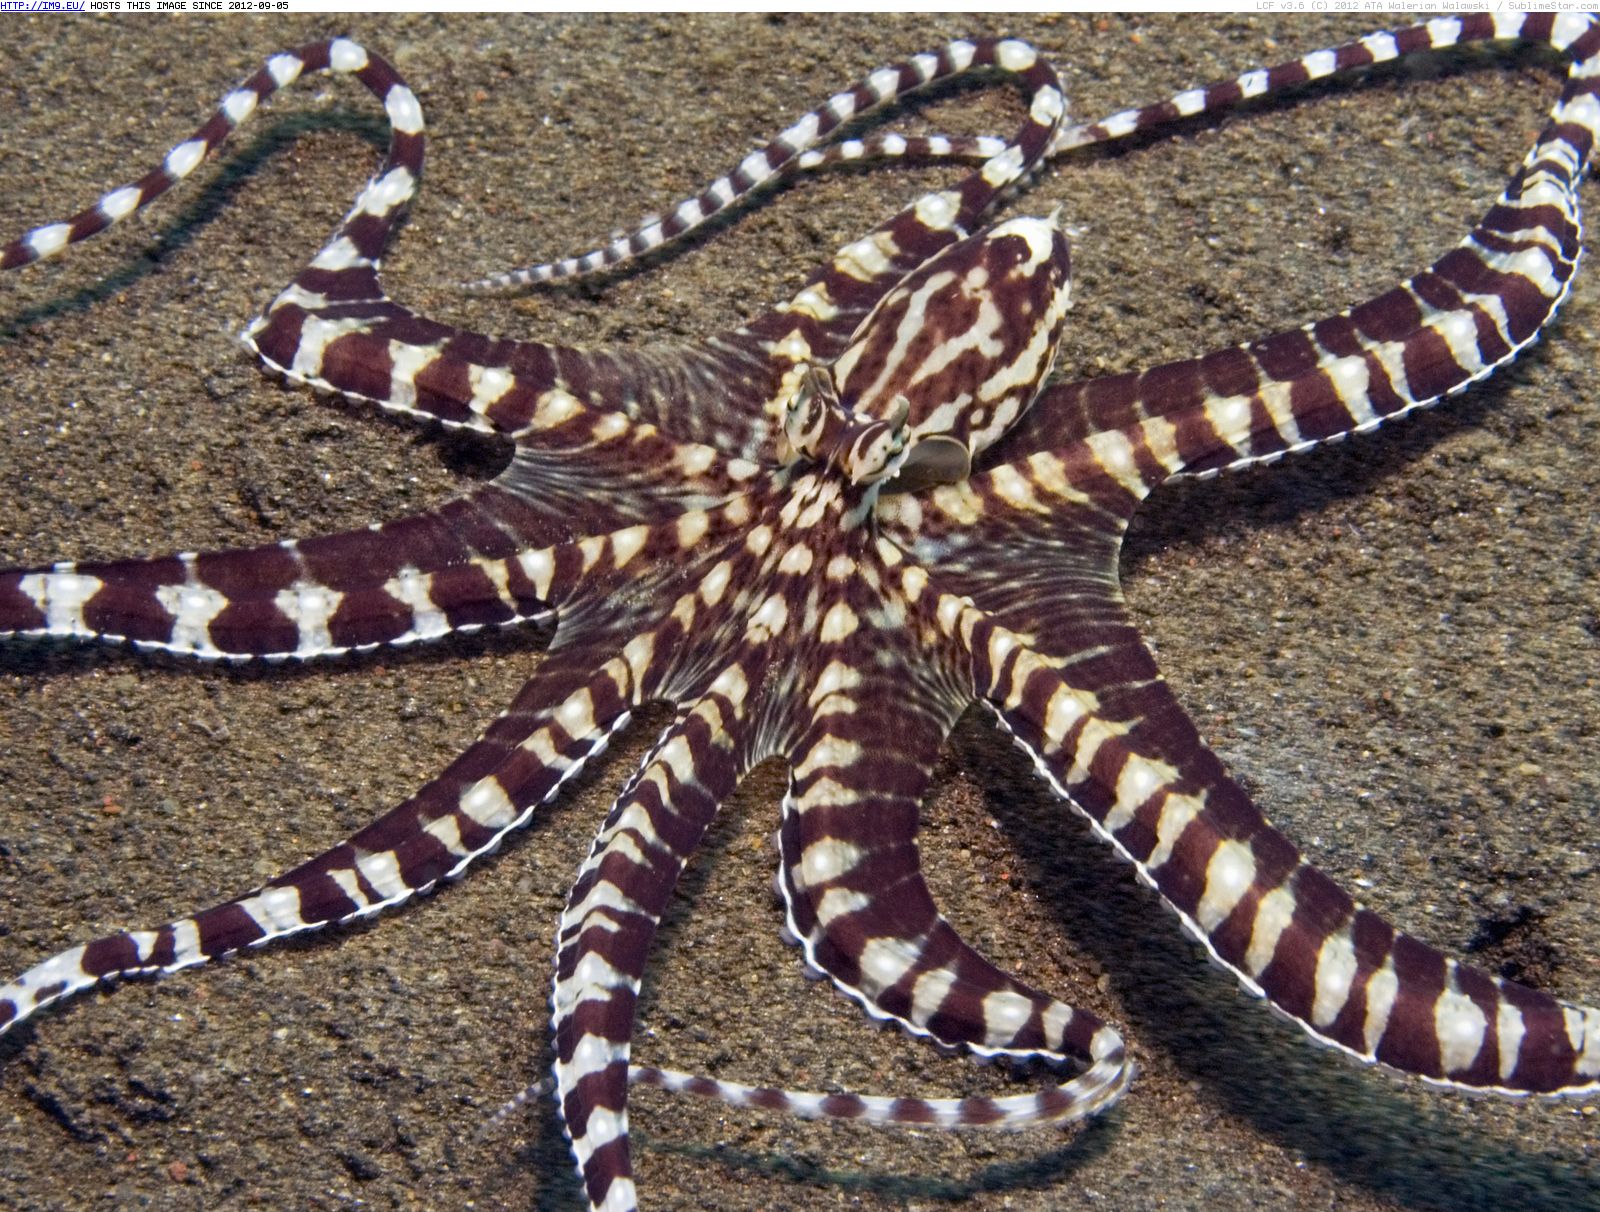 Indonesian Mimic Octopus